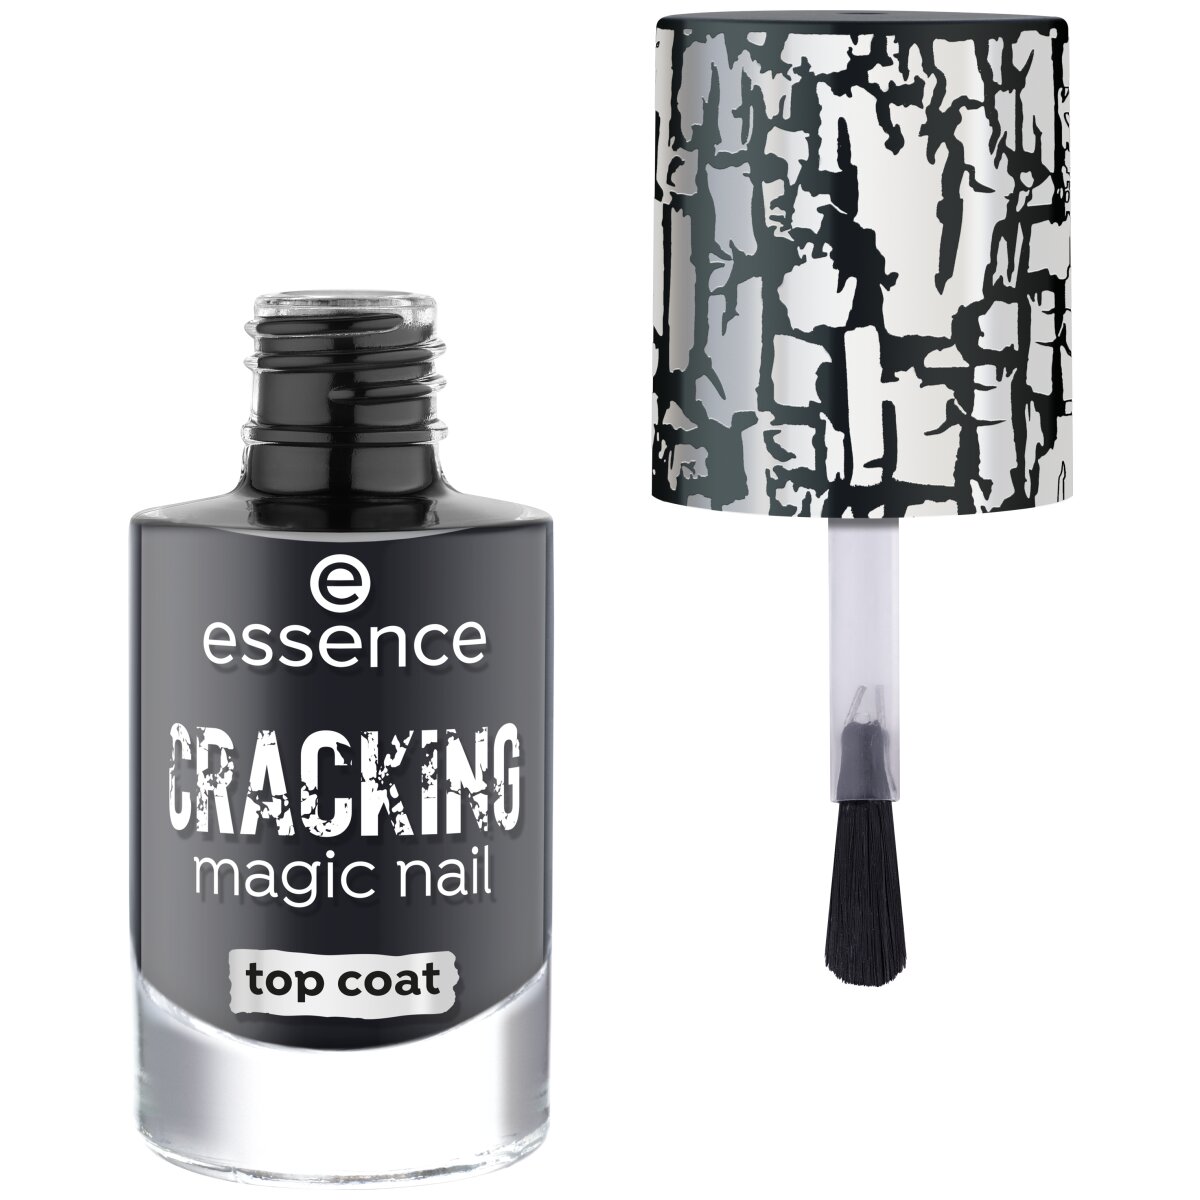 Essence Cracking Magic Nail Top Coat 01